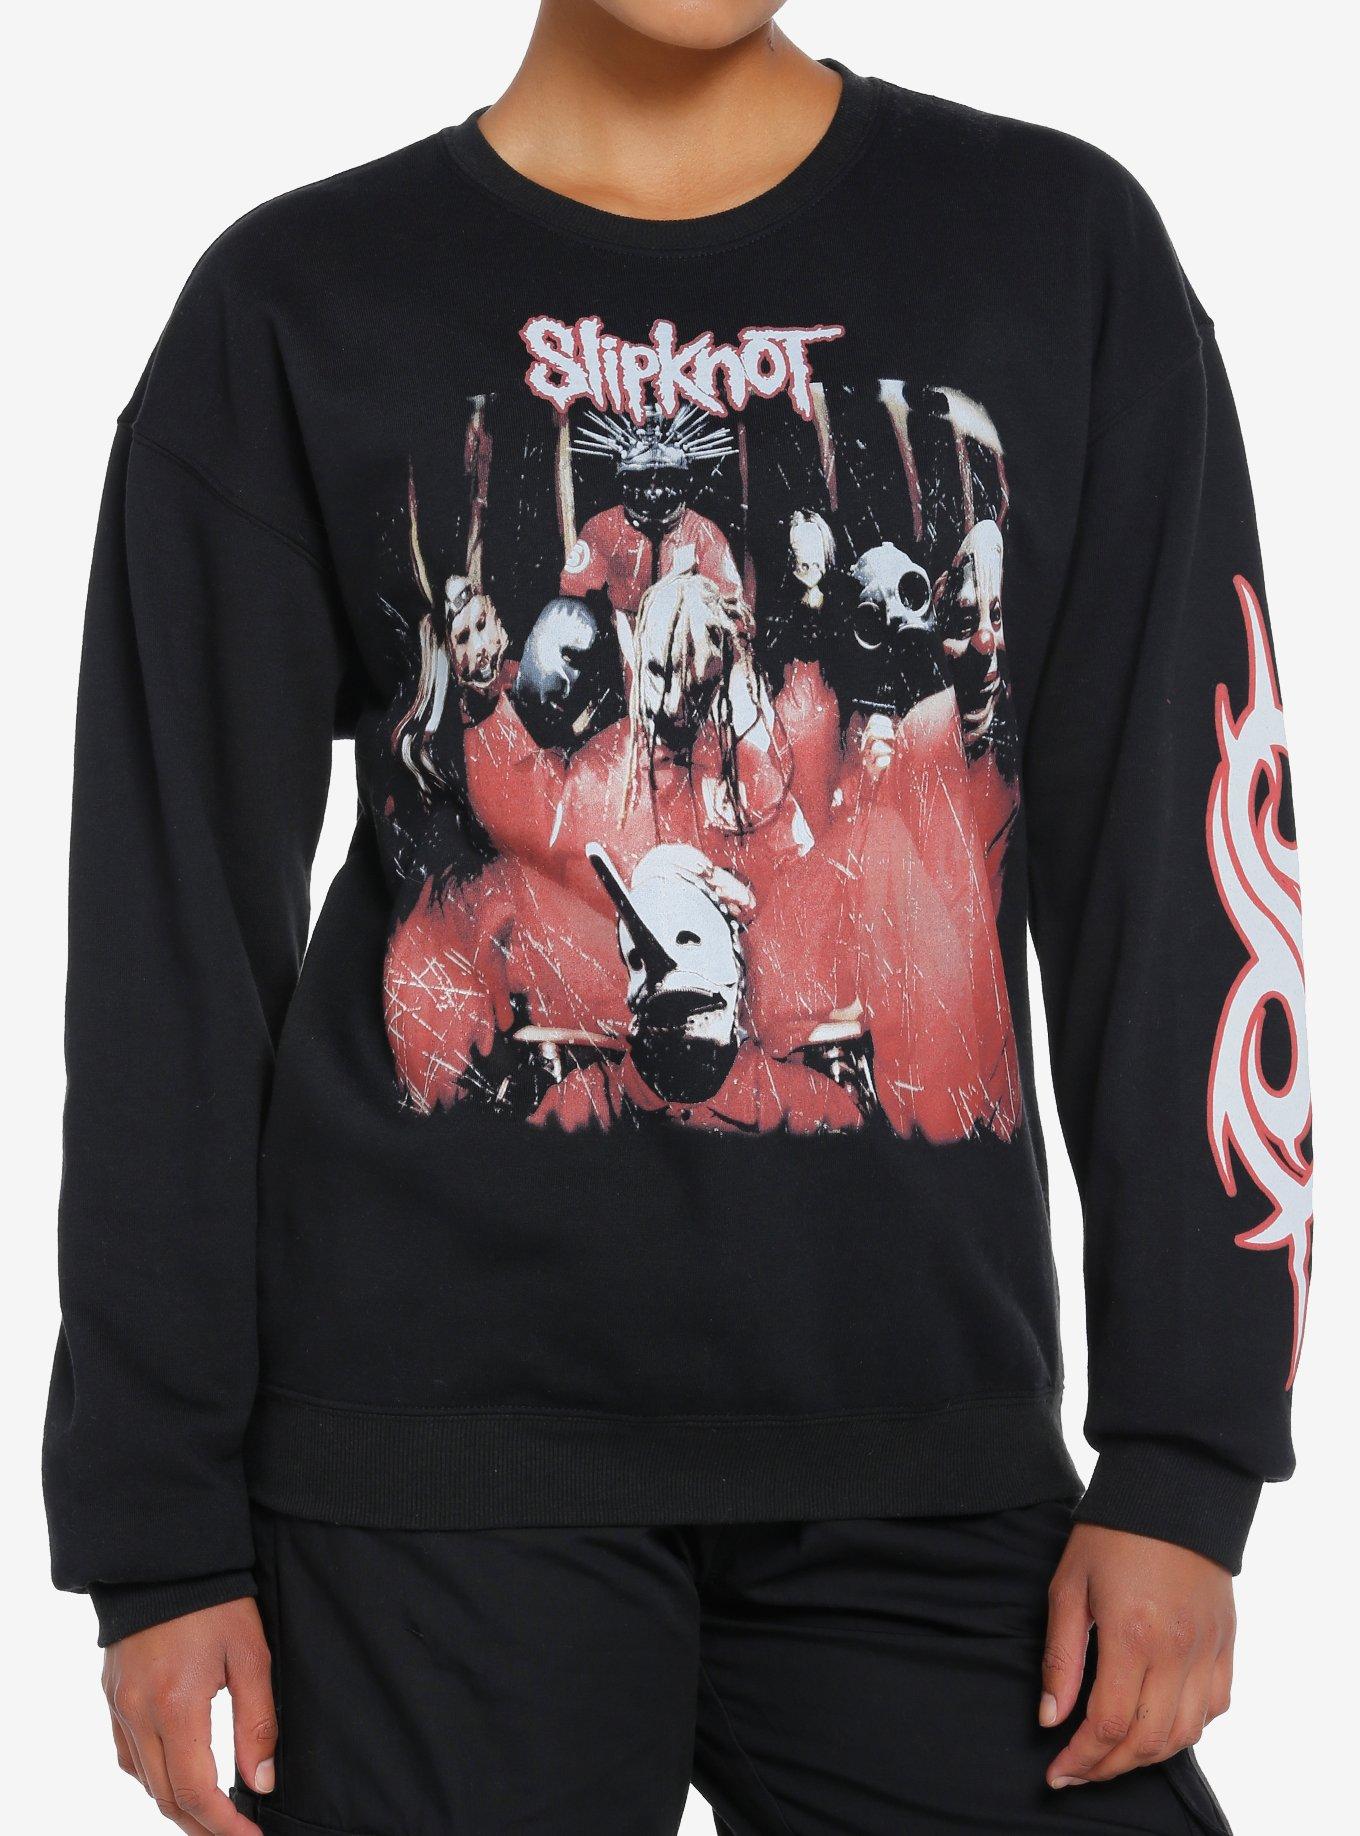 Slipknot Debut Album Cover Art Girls Sweatshirt, BLACK, hi-res